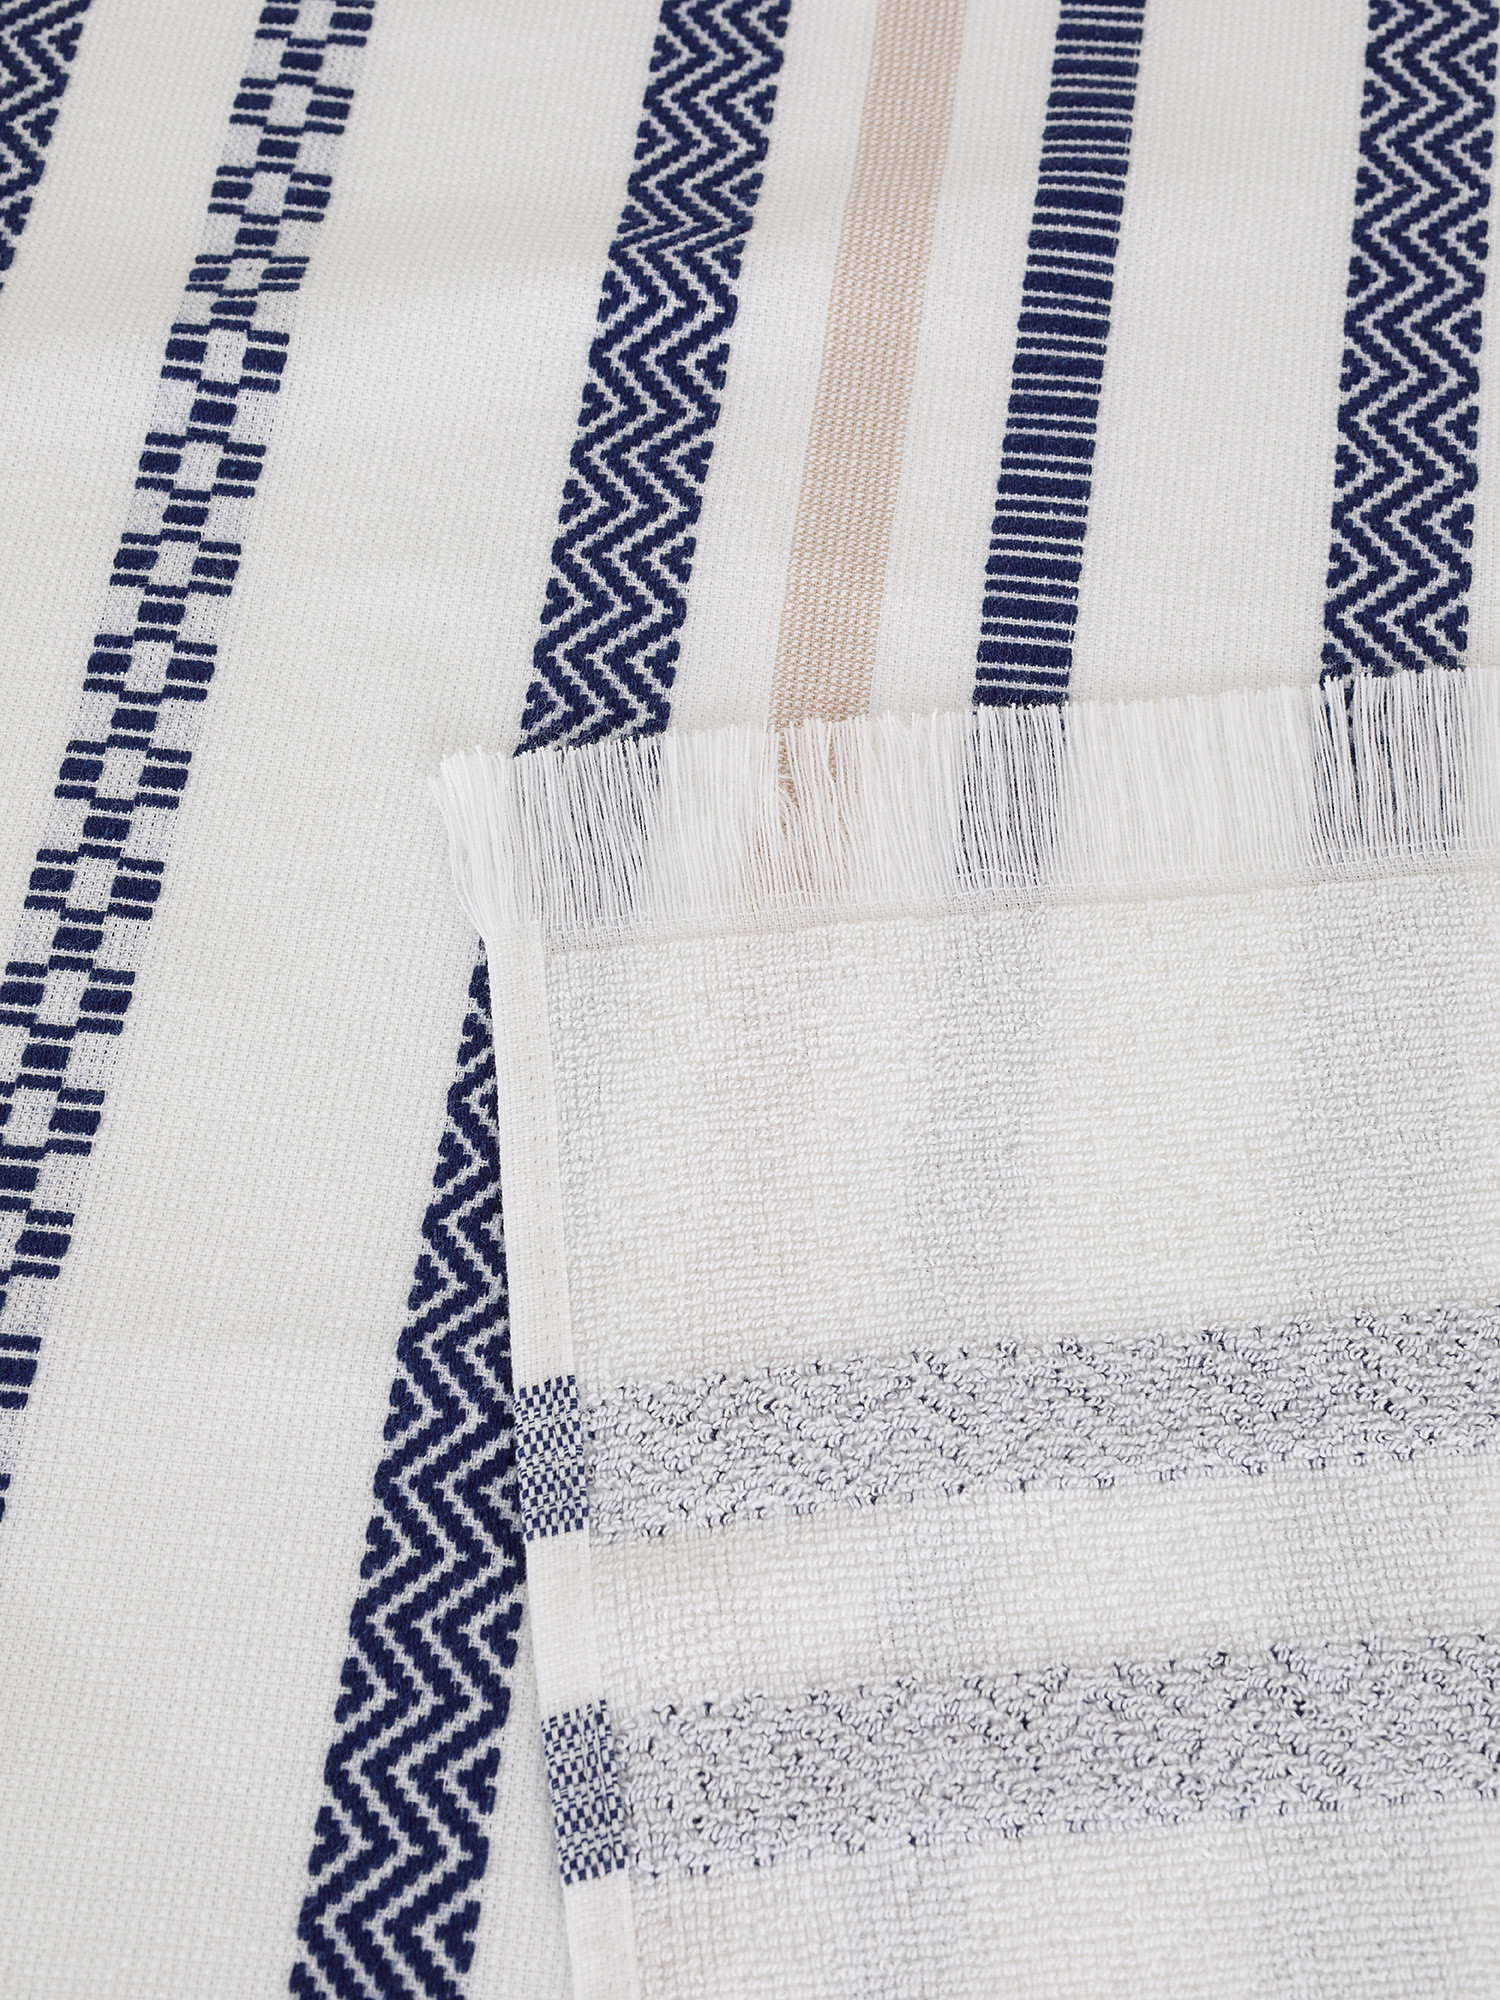 Striped jacquard cotton hammam beach towel, Blue, large image number 1